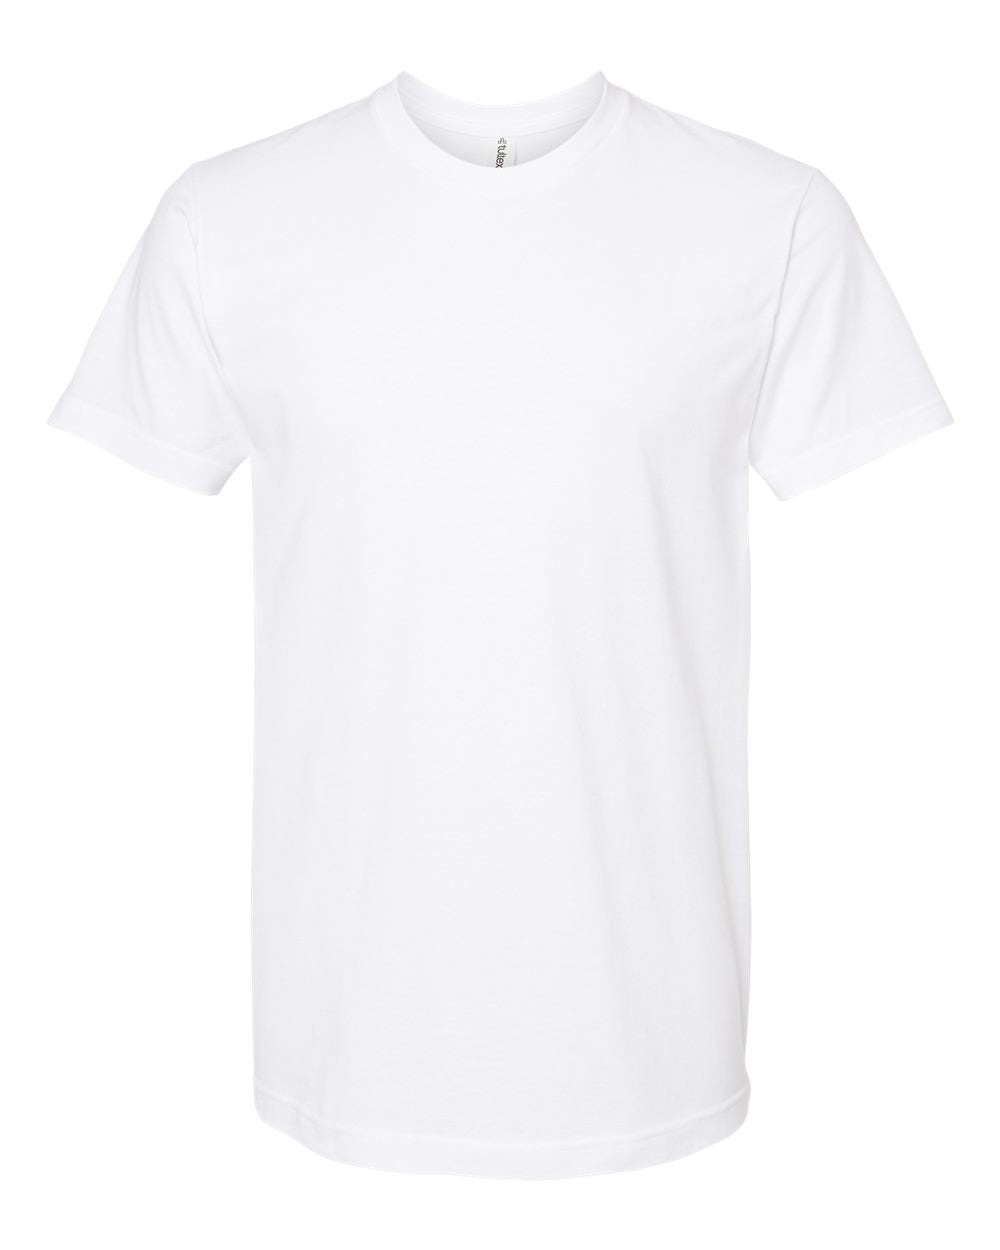 Women's Fit - Custom Shirts / T-Shirts (crew neck)